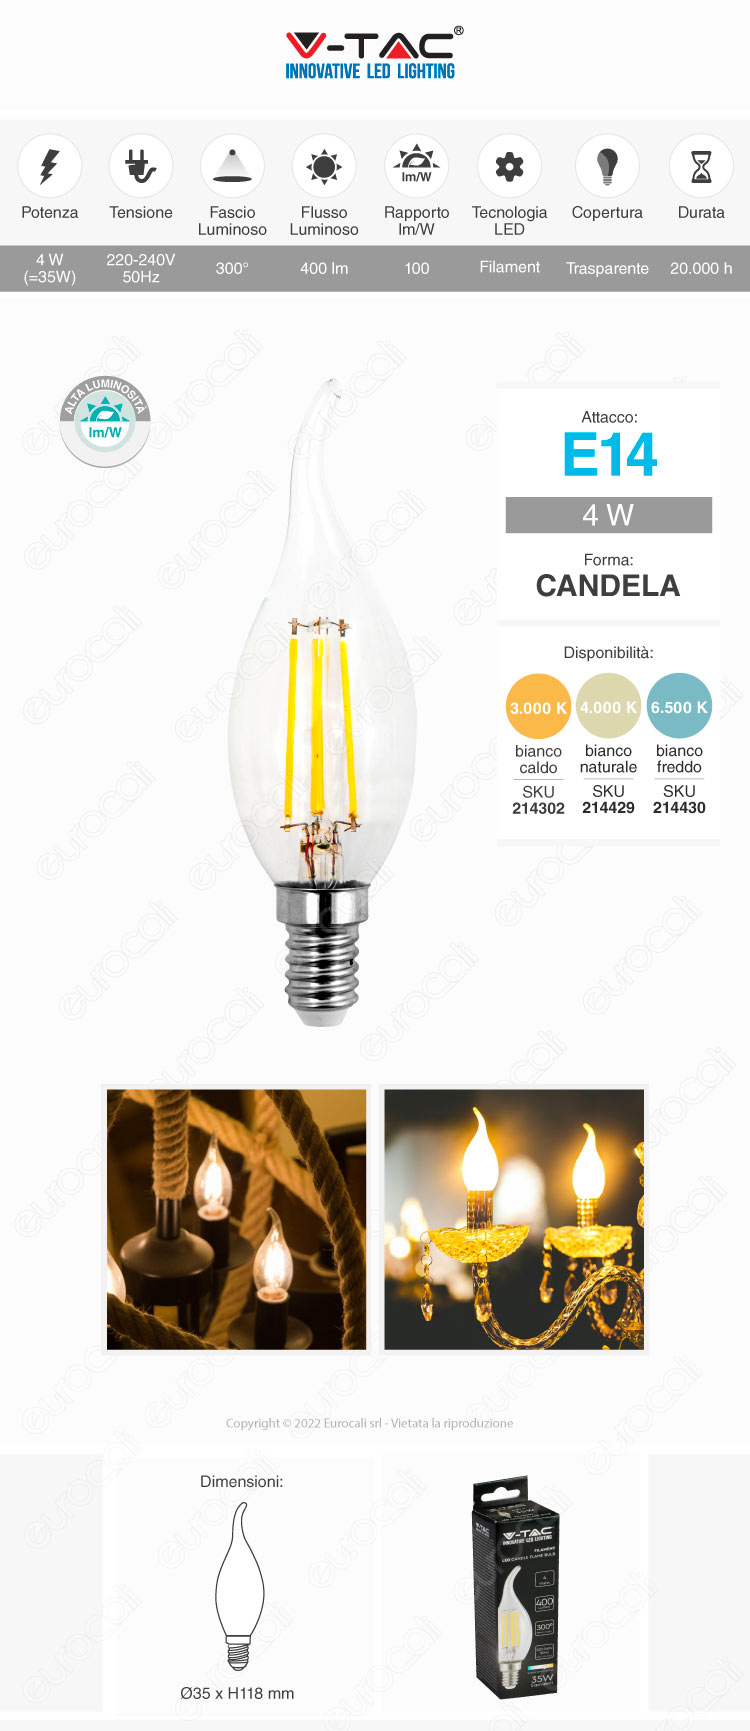 v-tac vt-1997 lampadina led e14 4w candle flame bulb c35 filament transparent glass